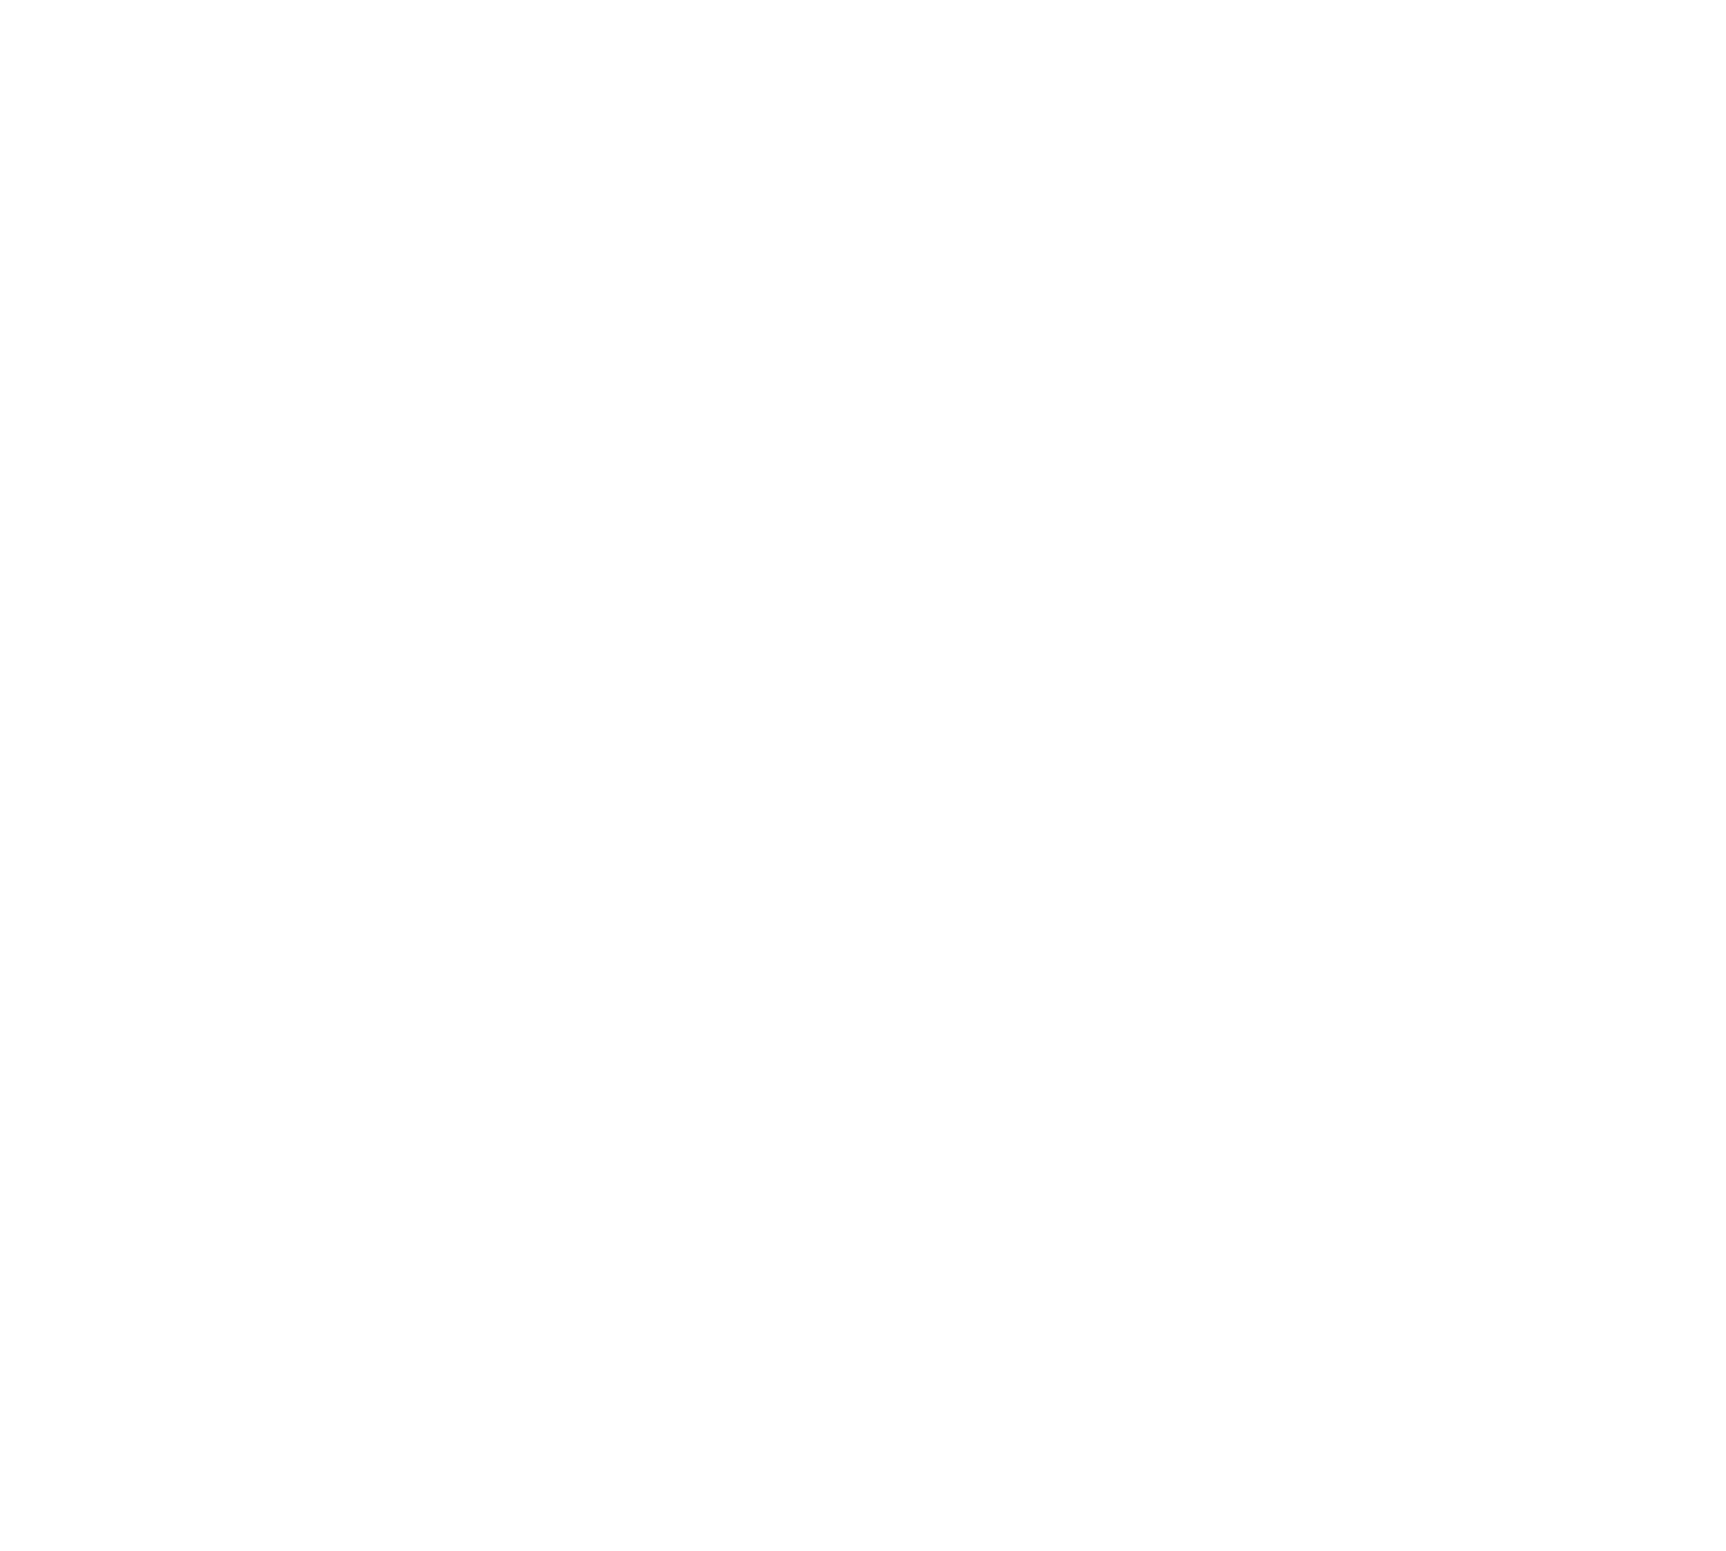 Spring Hill Baptist Church